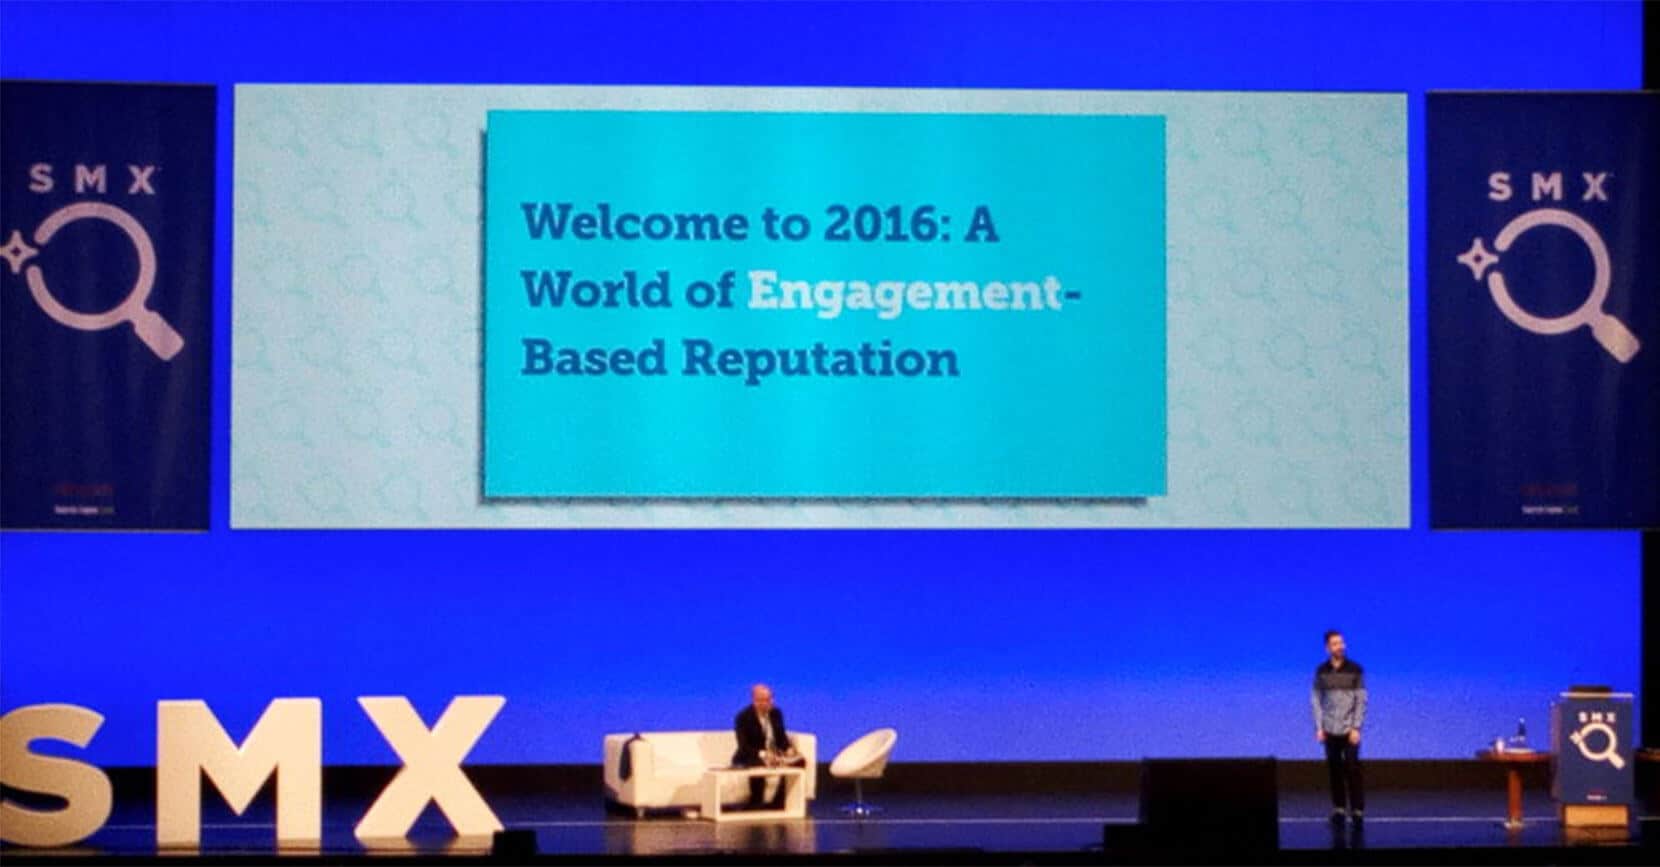 Online Marketing 2016 - A World of Engagement-Based Reputation